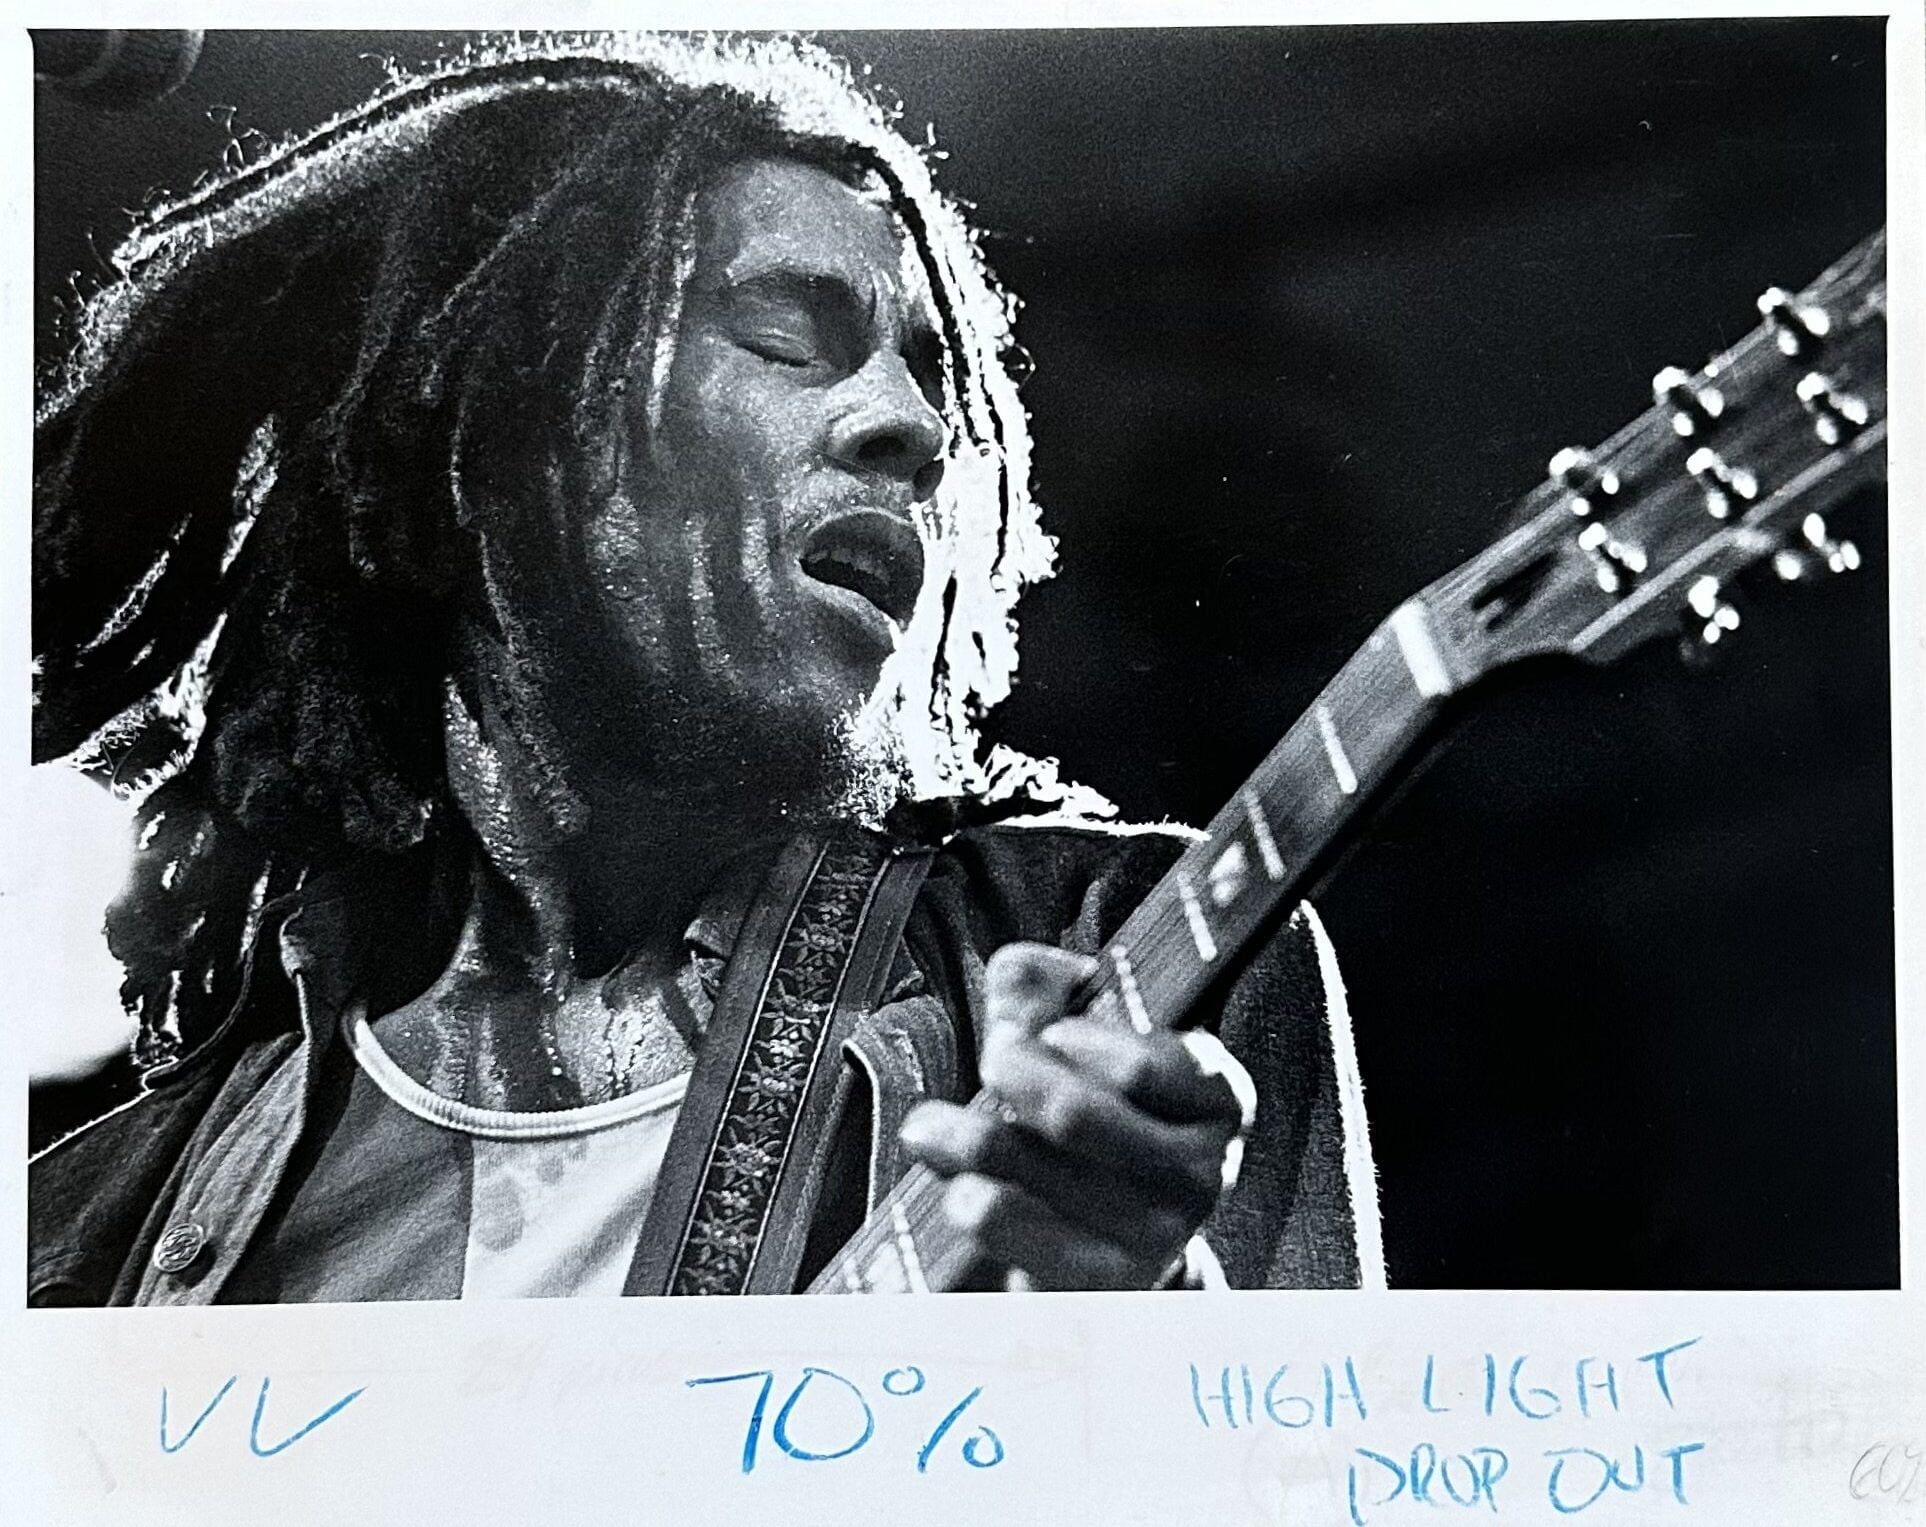 Original vintage still of Bob Marley photographed by Jim Anderson